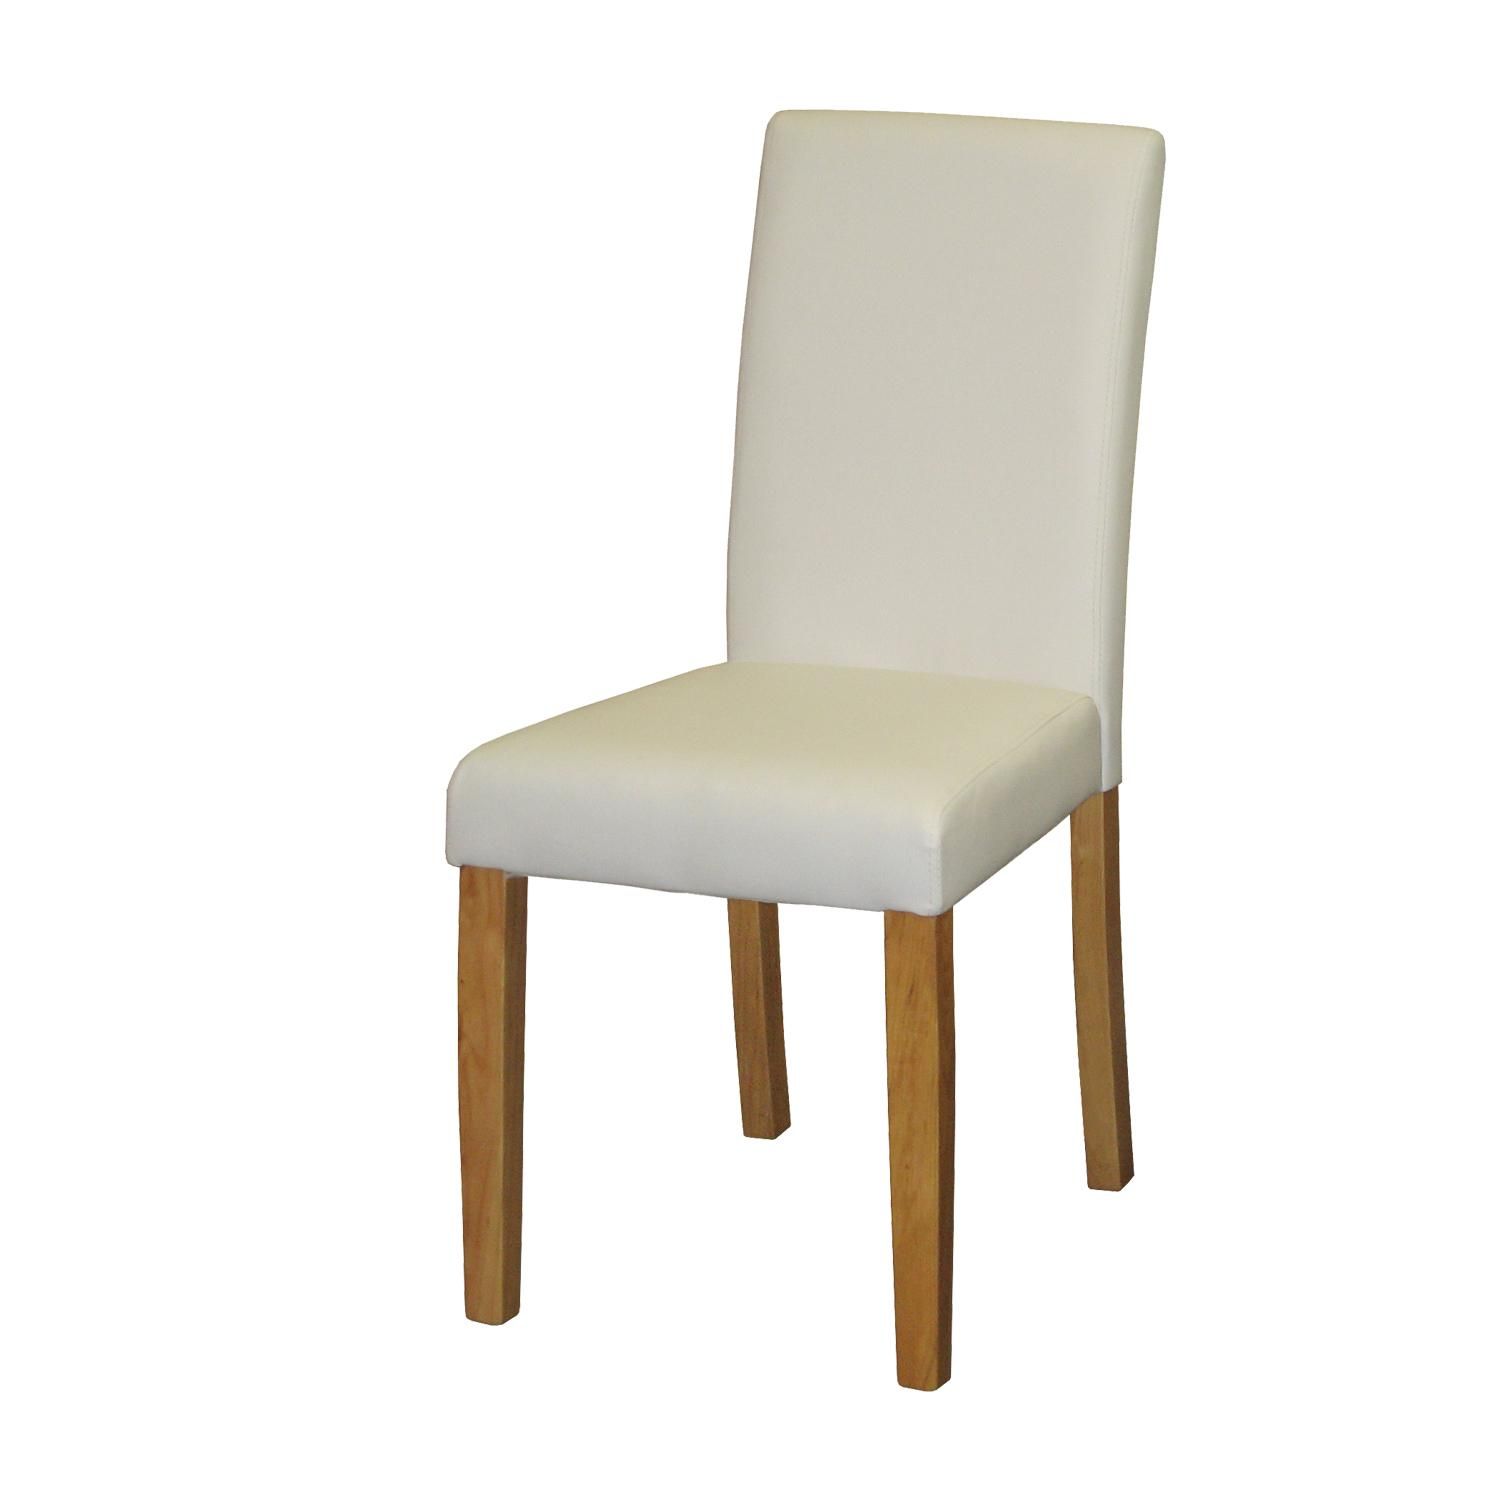 Židle PRIMA bílá 3037 - IDEA nábytek